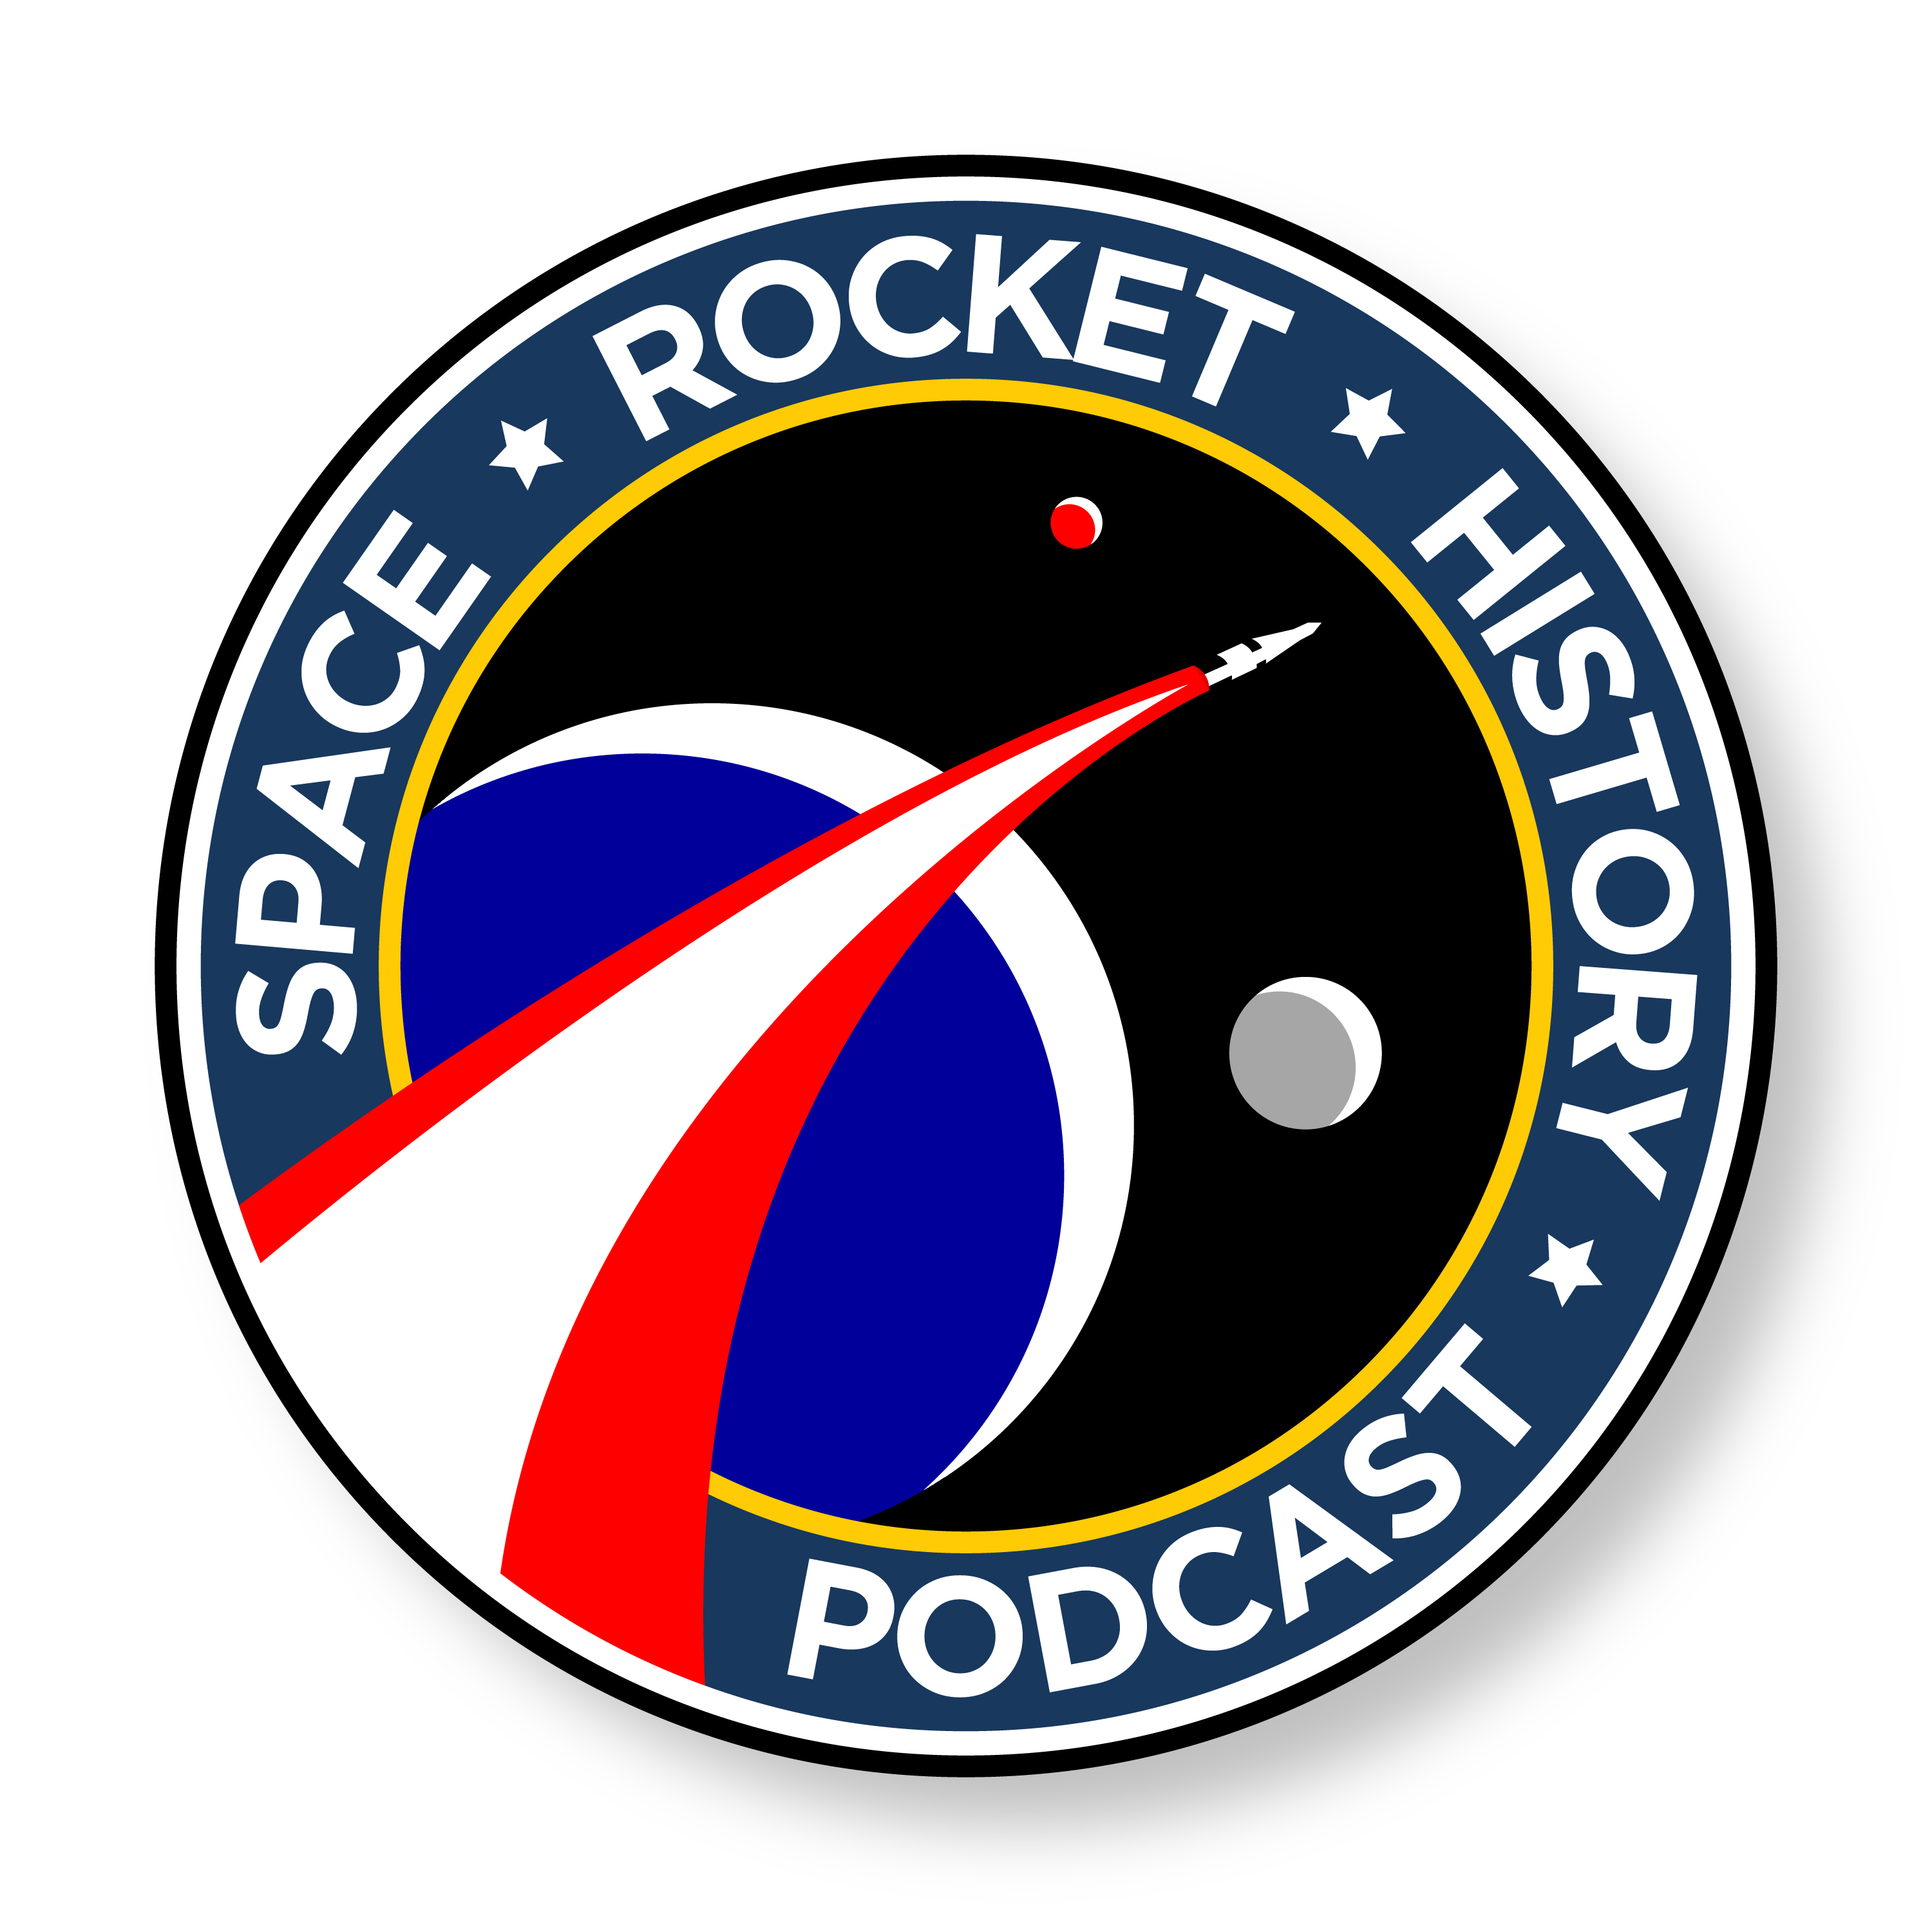 Space Rocket History #327 – Soyuz 11 – The Prime Crew